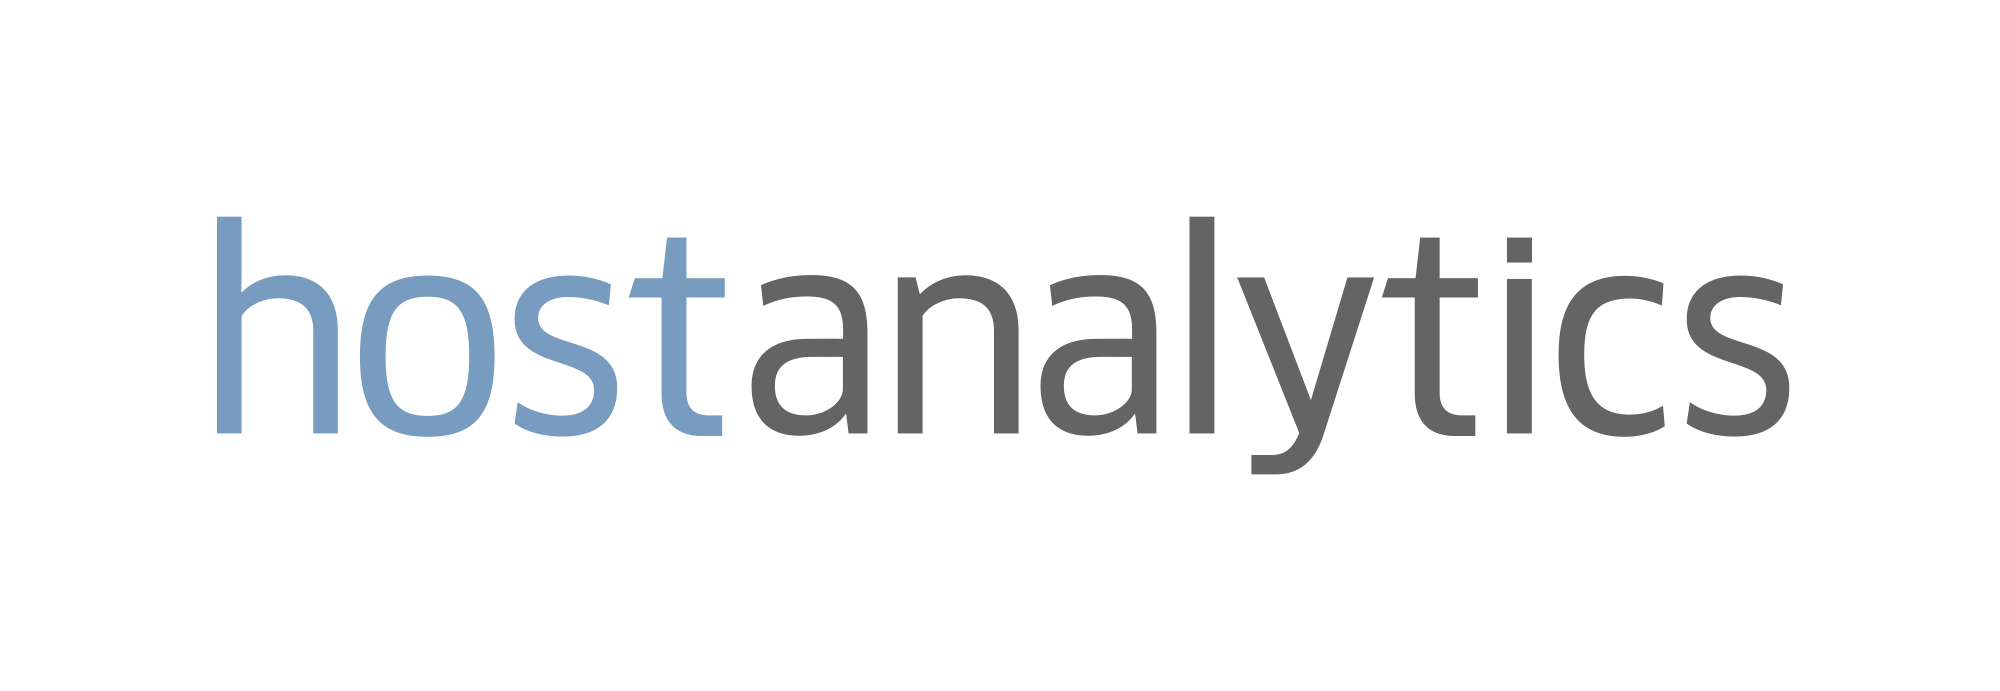 Host-Analytics-logo_2016.png